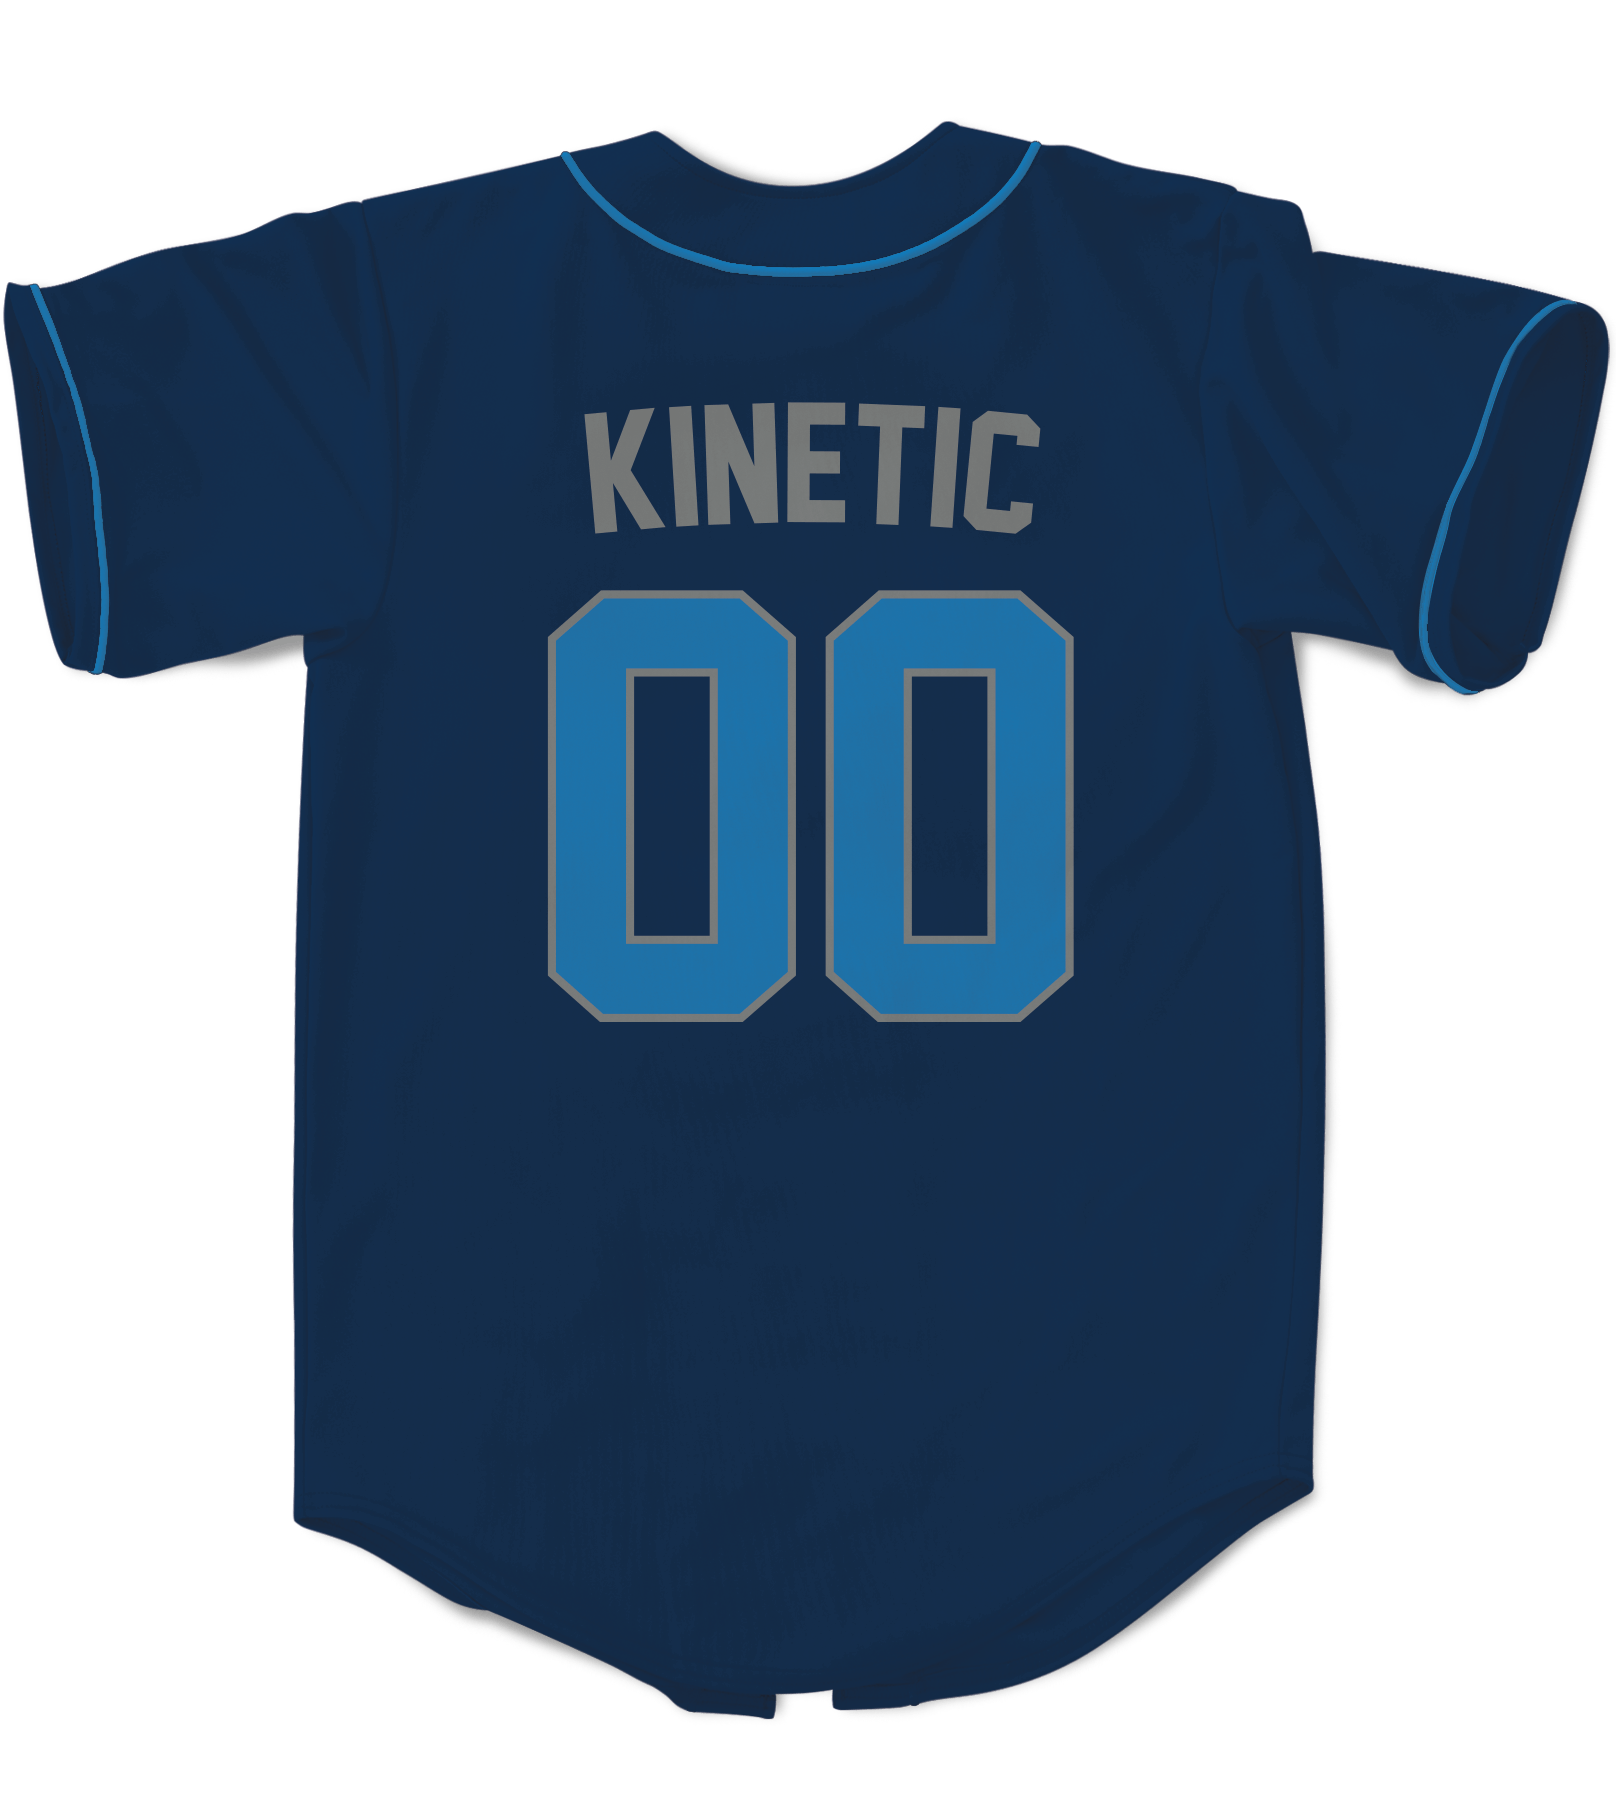 PHI DELTA THETA - The Block Baseball Jersey Premium Baseball Kinetic Society LLC 